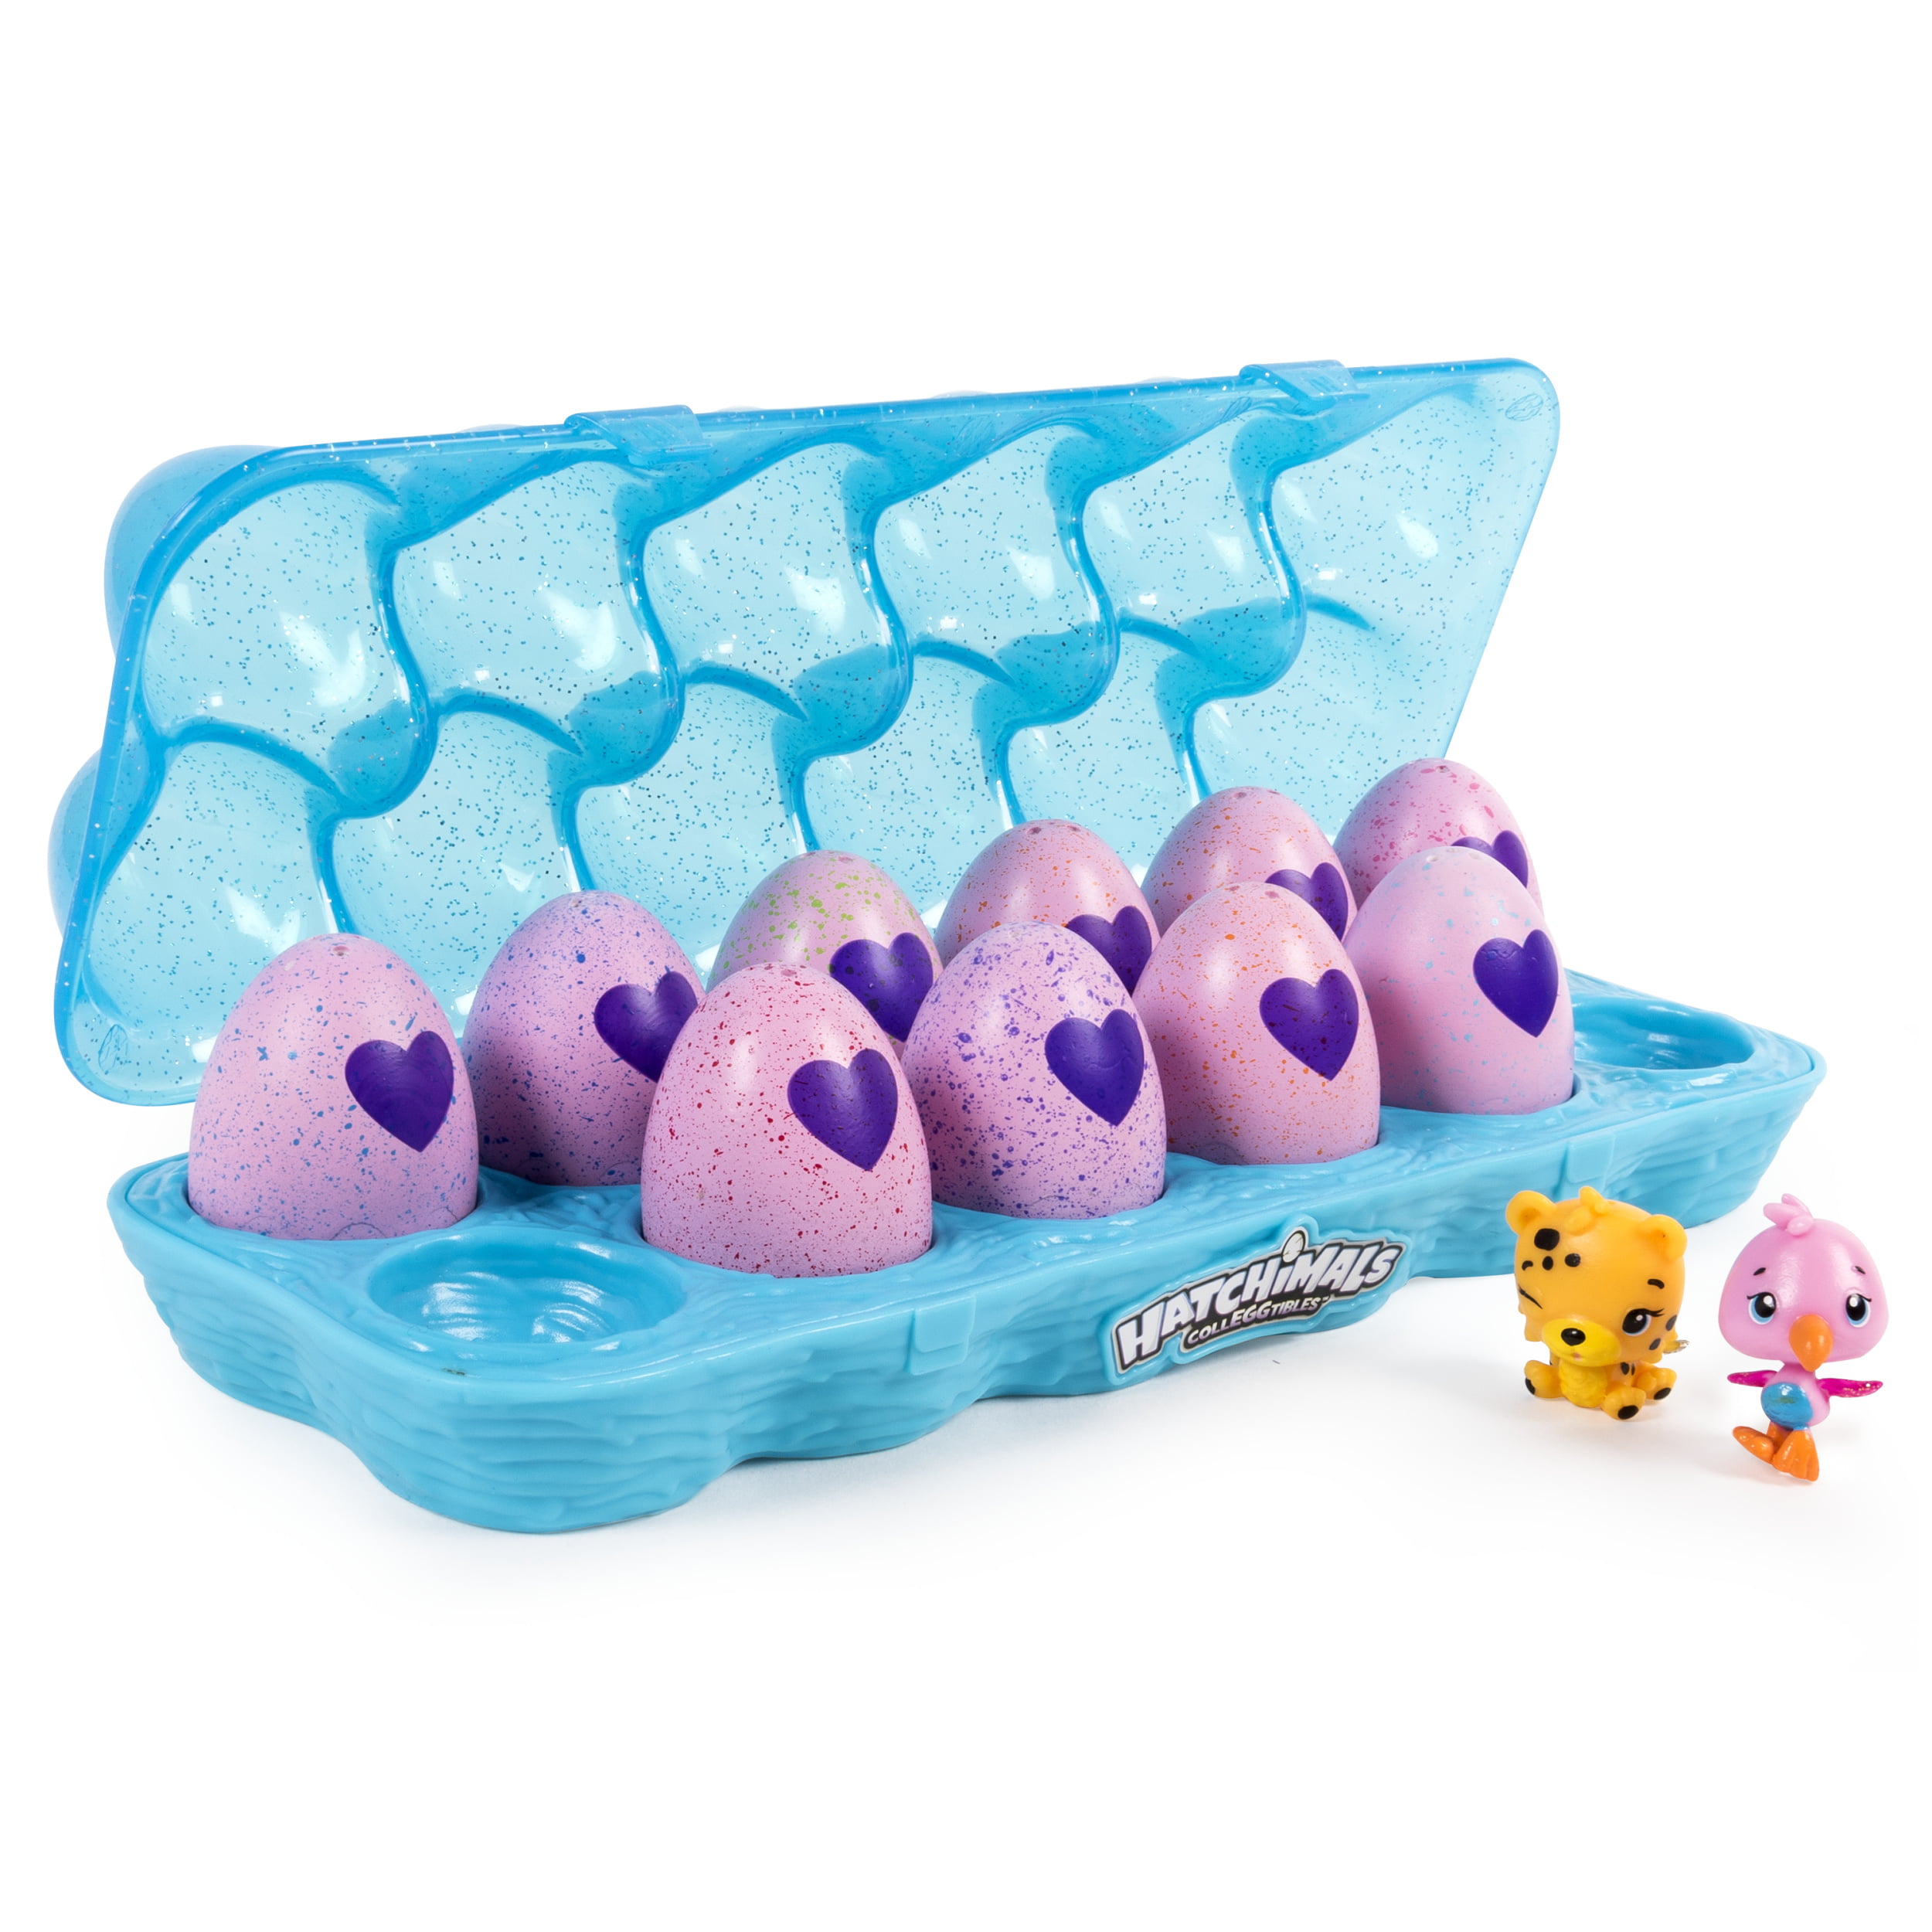 Hatchimal Egg Carton 2 Pack Season 4 